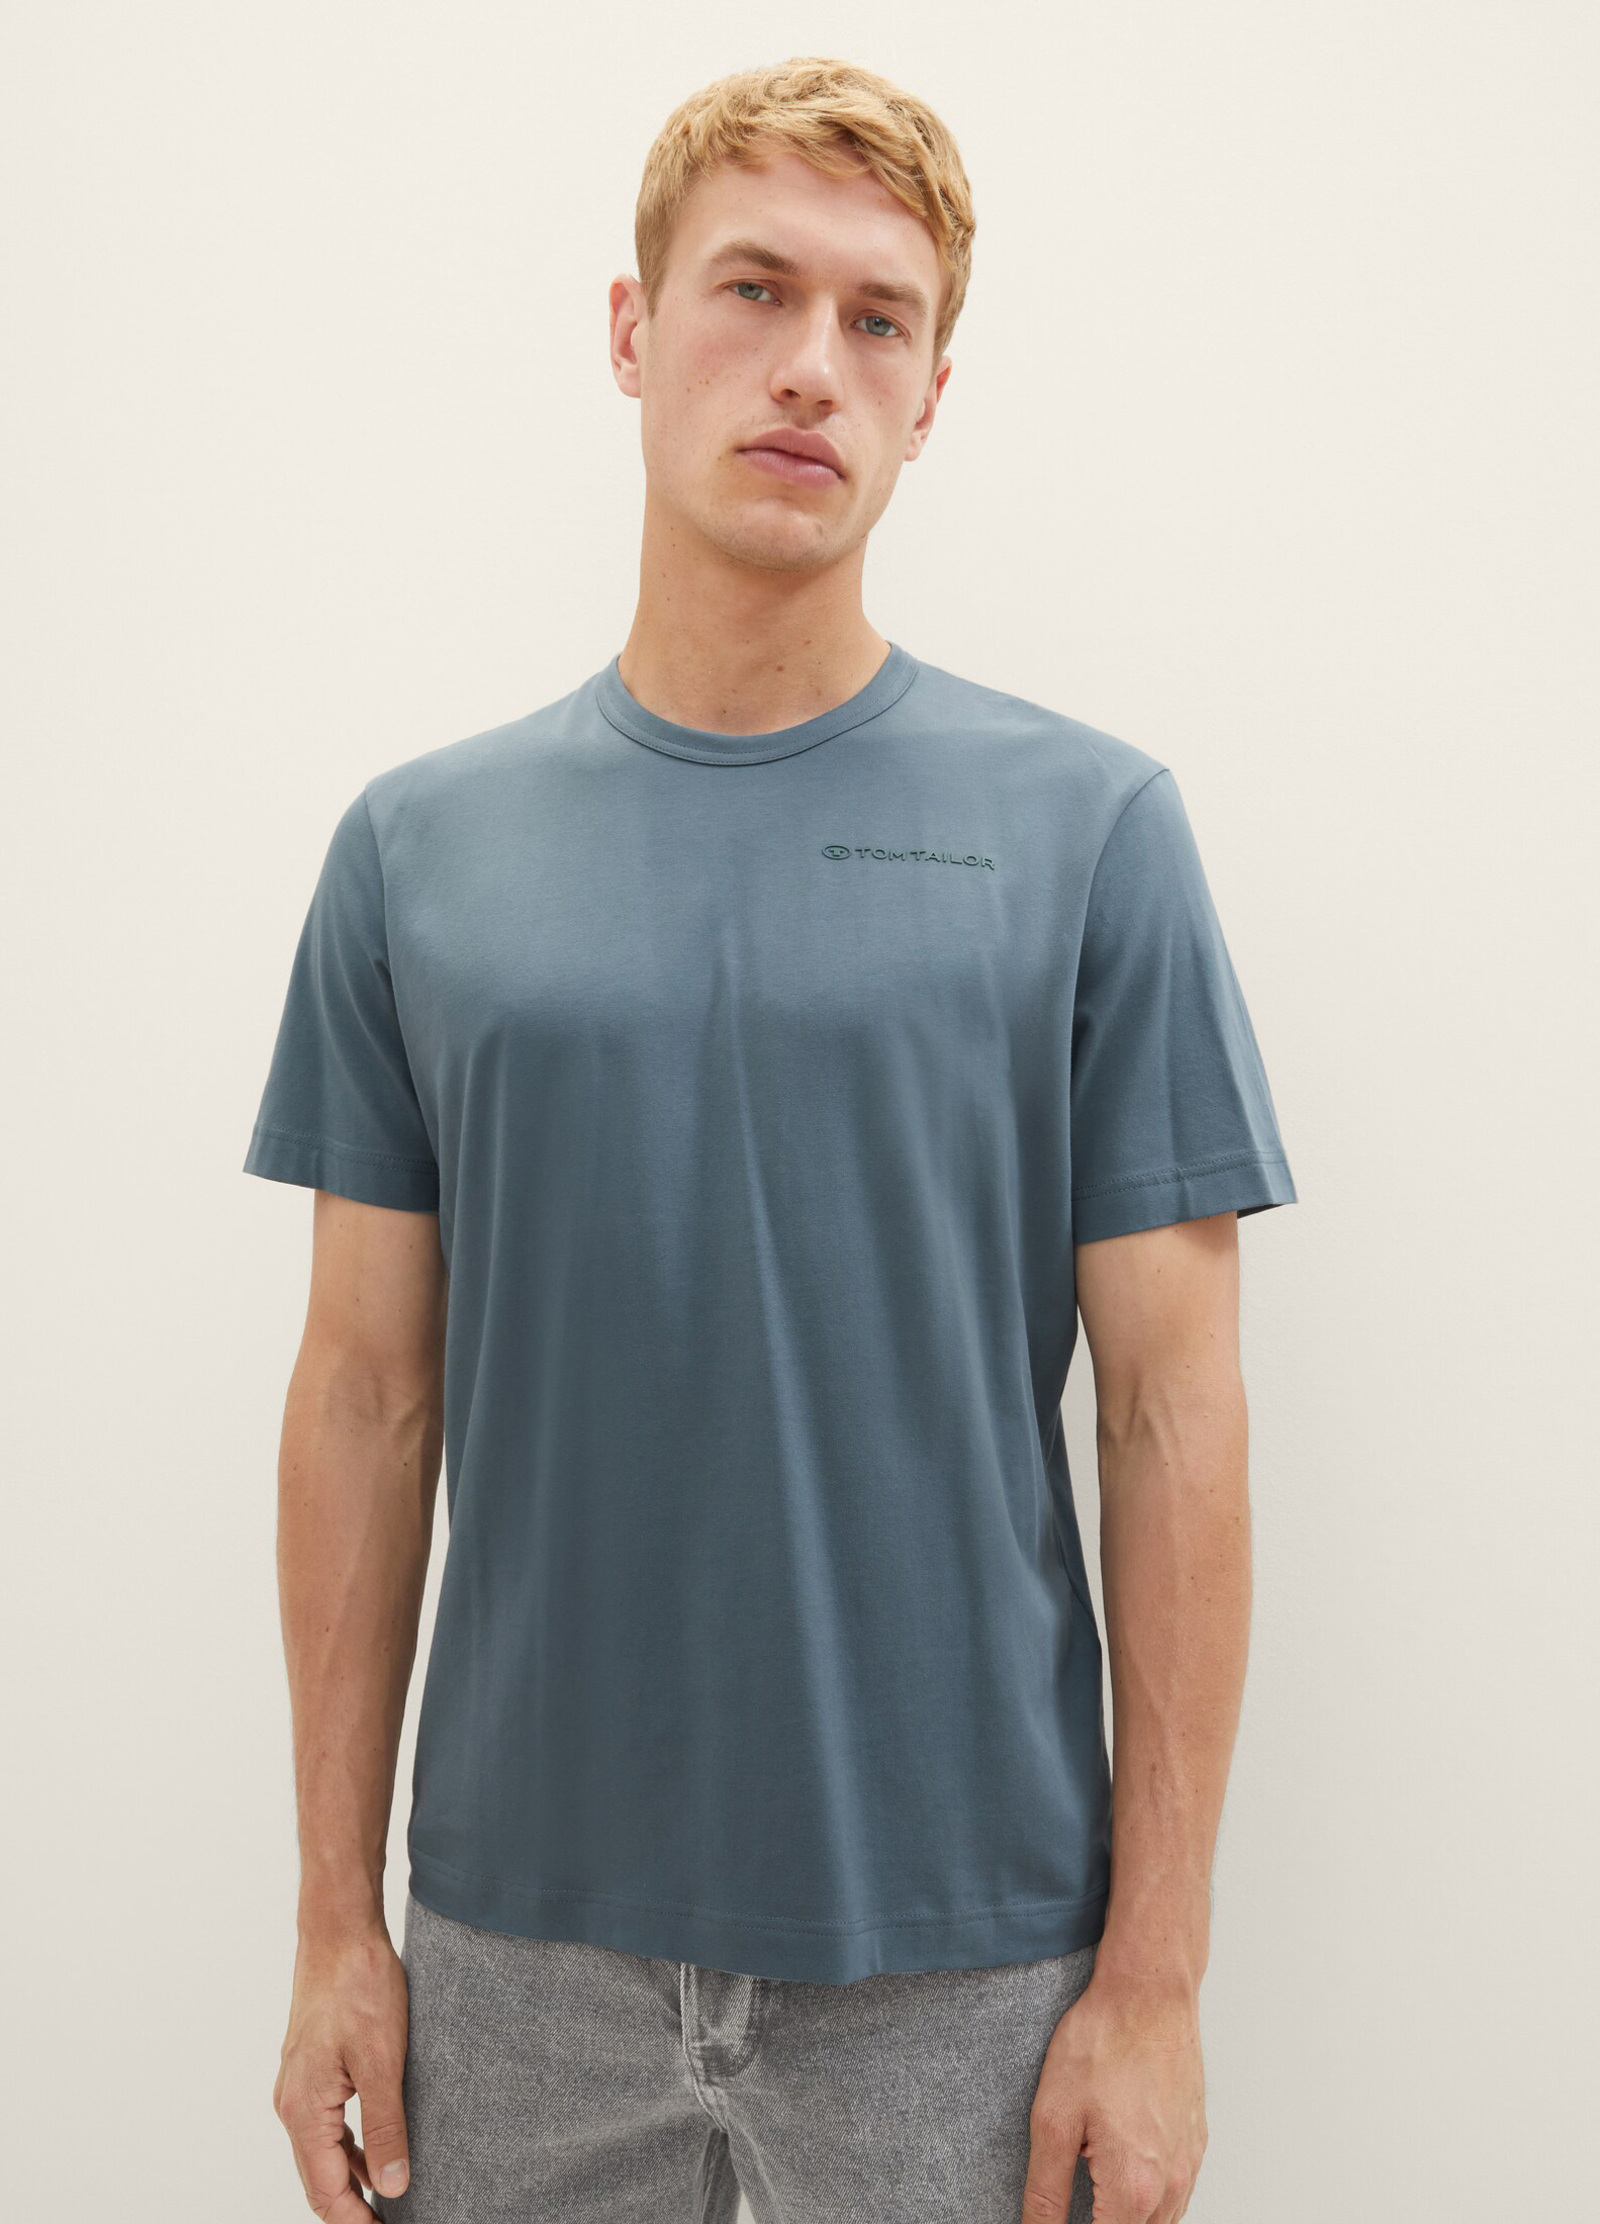 Basic - L Size Tom Teal Dark Tailor® Dusty T-shirt